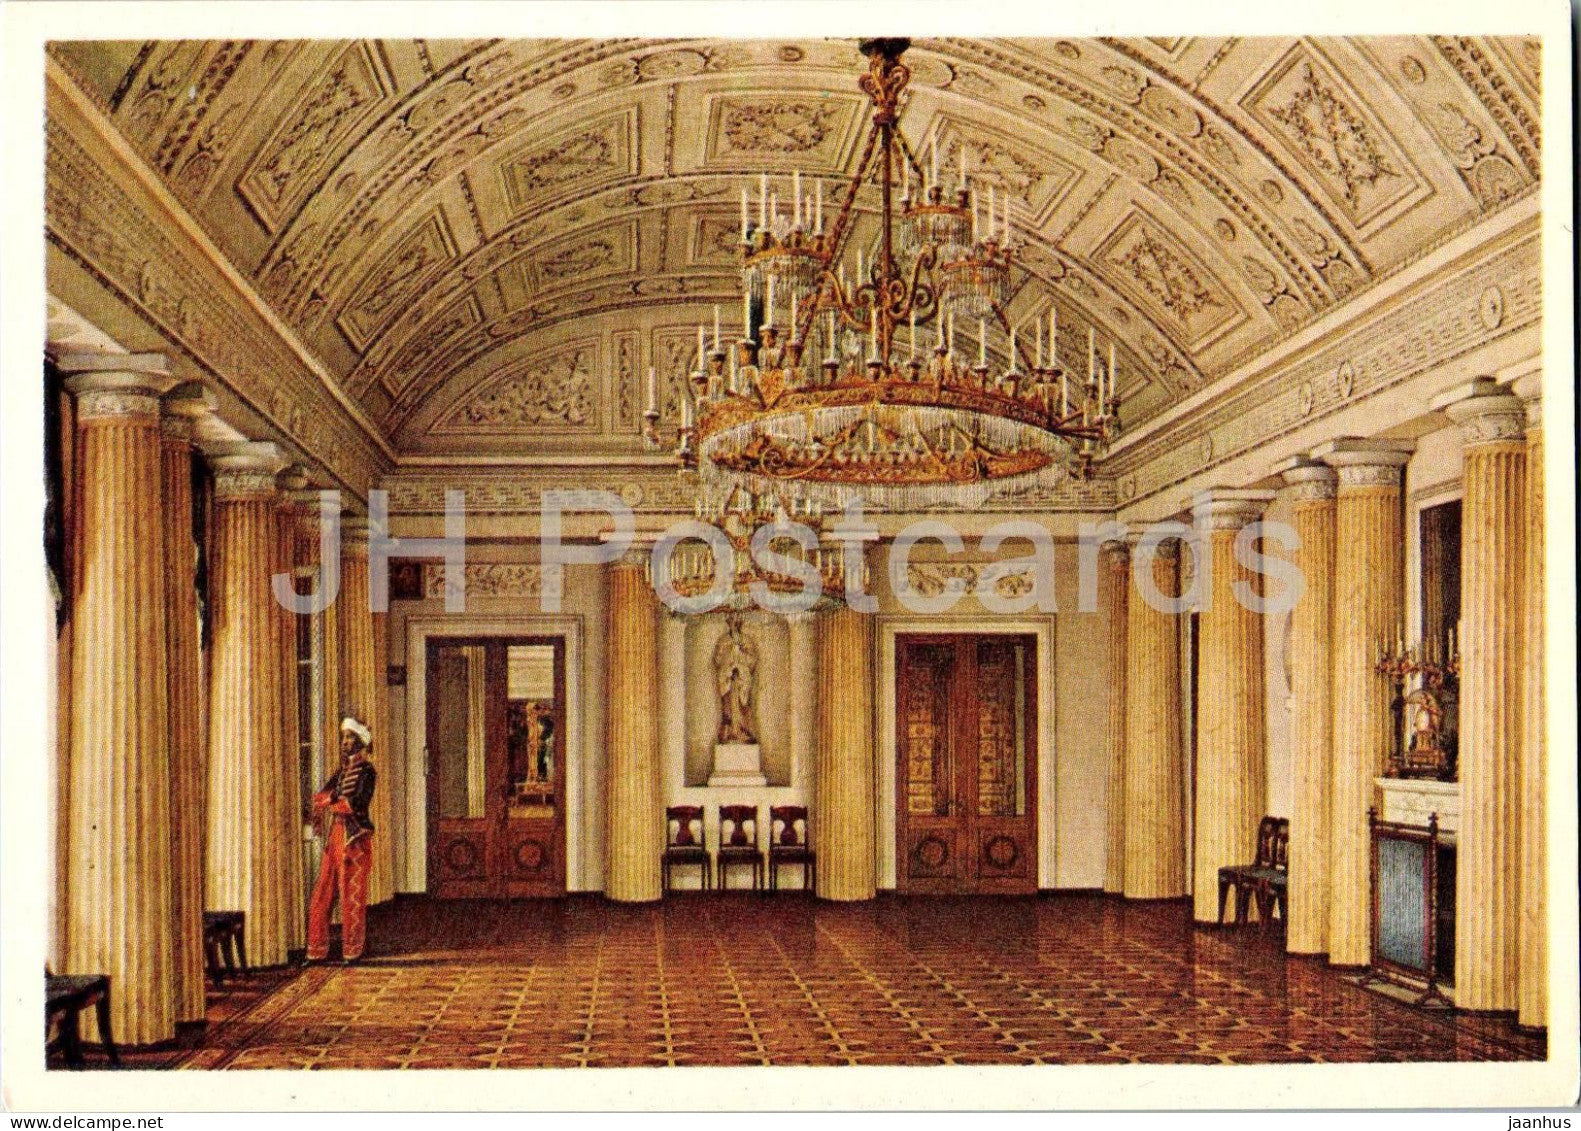 Leningrad - St Petersburg - Winter Palace - The Arab Hall - painting by Oukhtomski - 1975 - Russia USSR - unused - JH Postcards